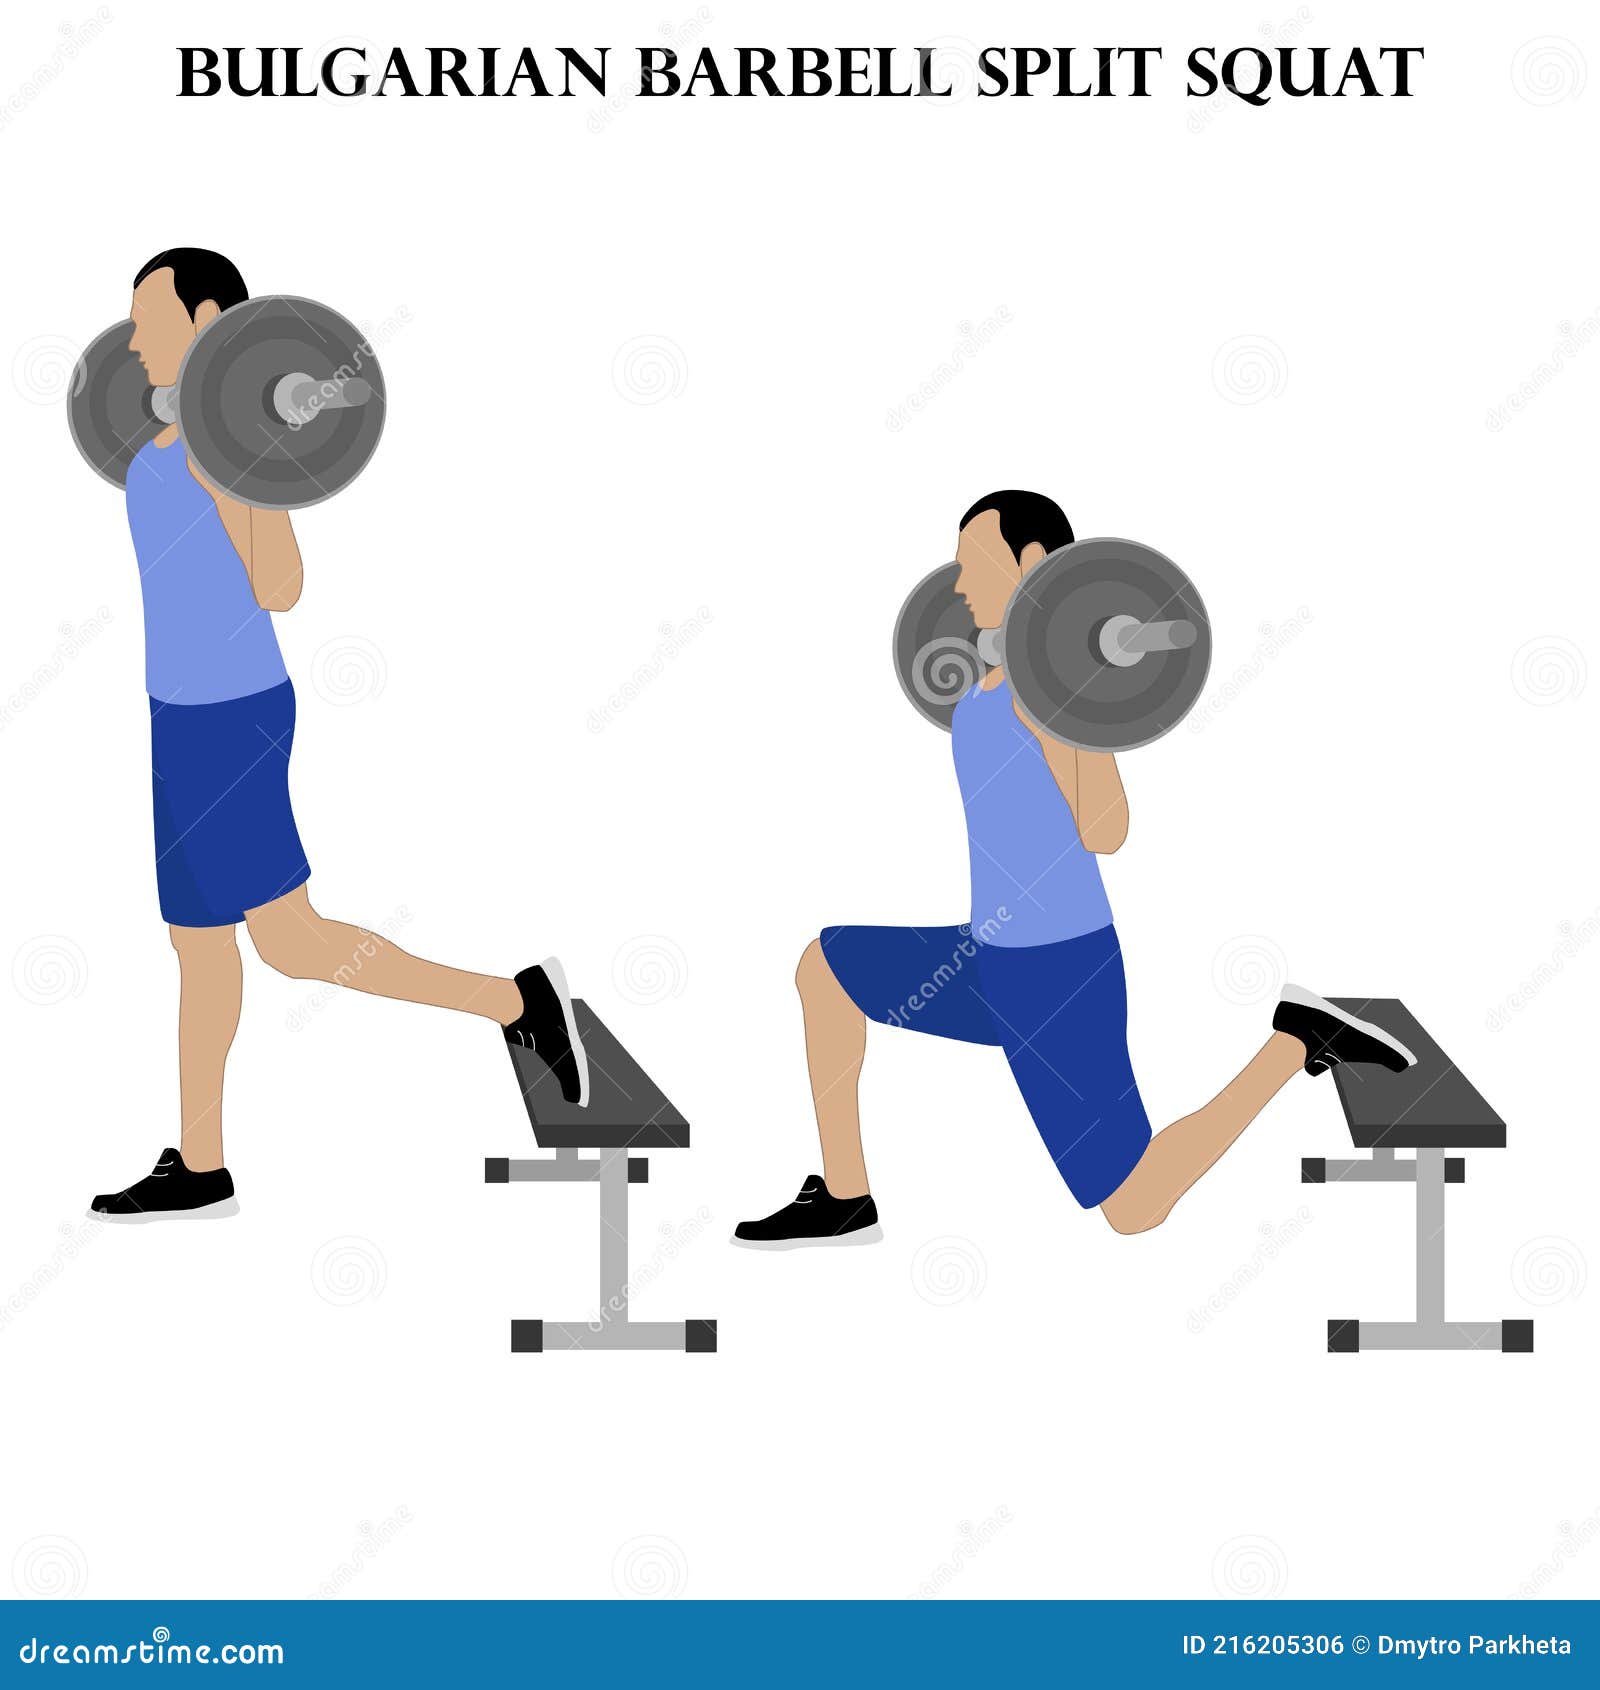 Bulgarian Barbell Split Squat Exercise Strength Workout Vector Illustration  Stock Vector - Illustration of background, athlete: 216205306